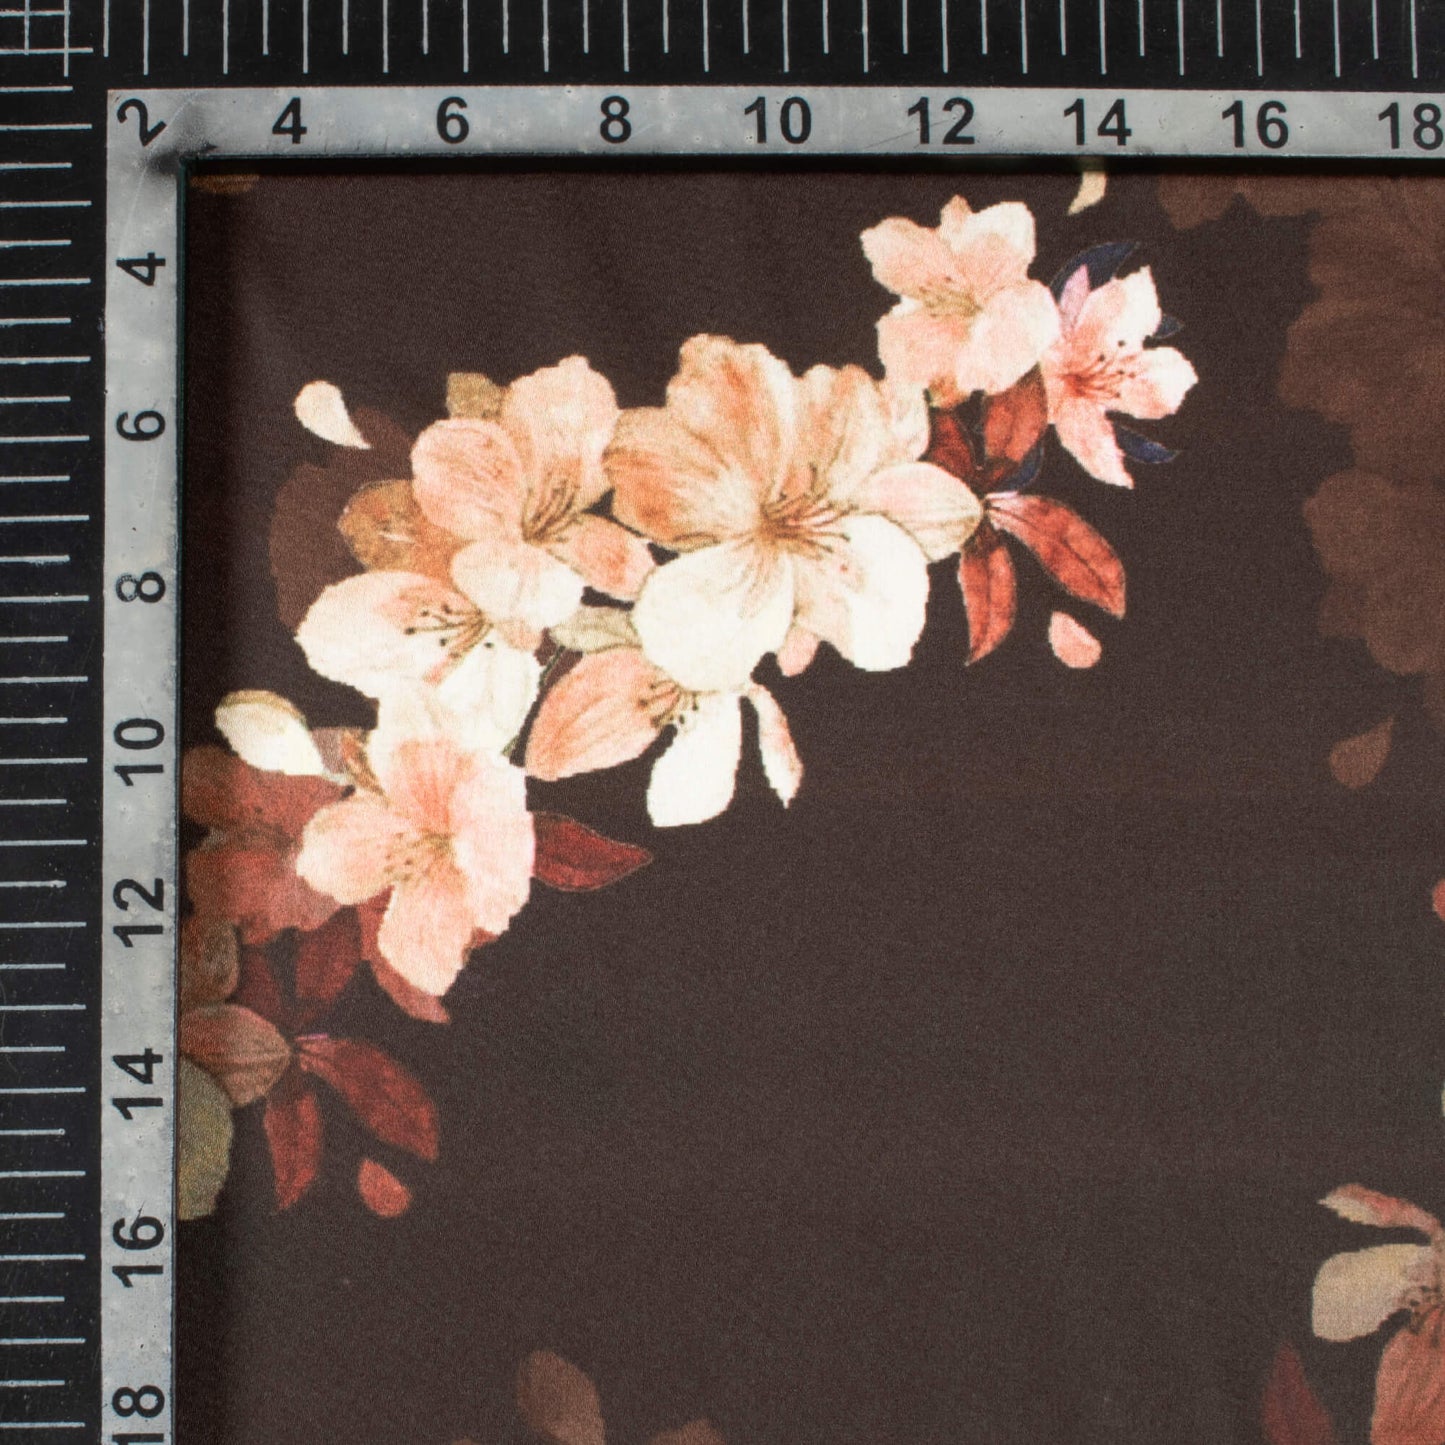 Dark Brown And Peach Floral Pattern Digital Print Japan Satin Fabric